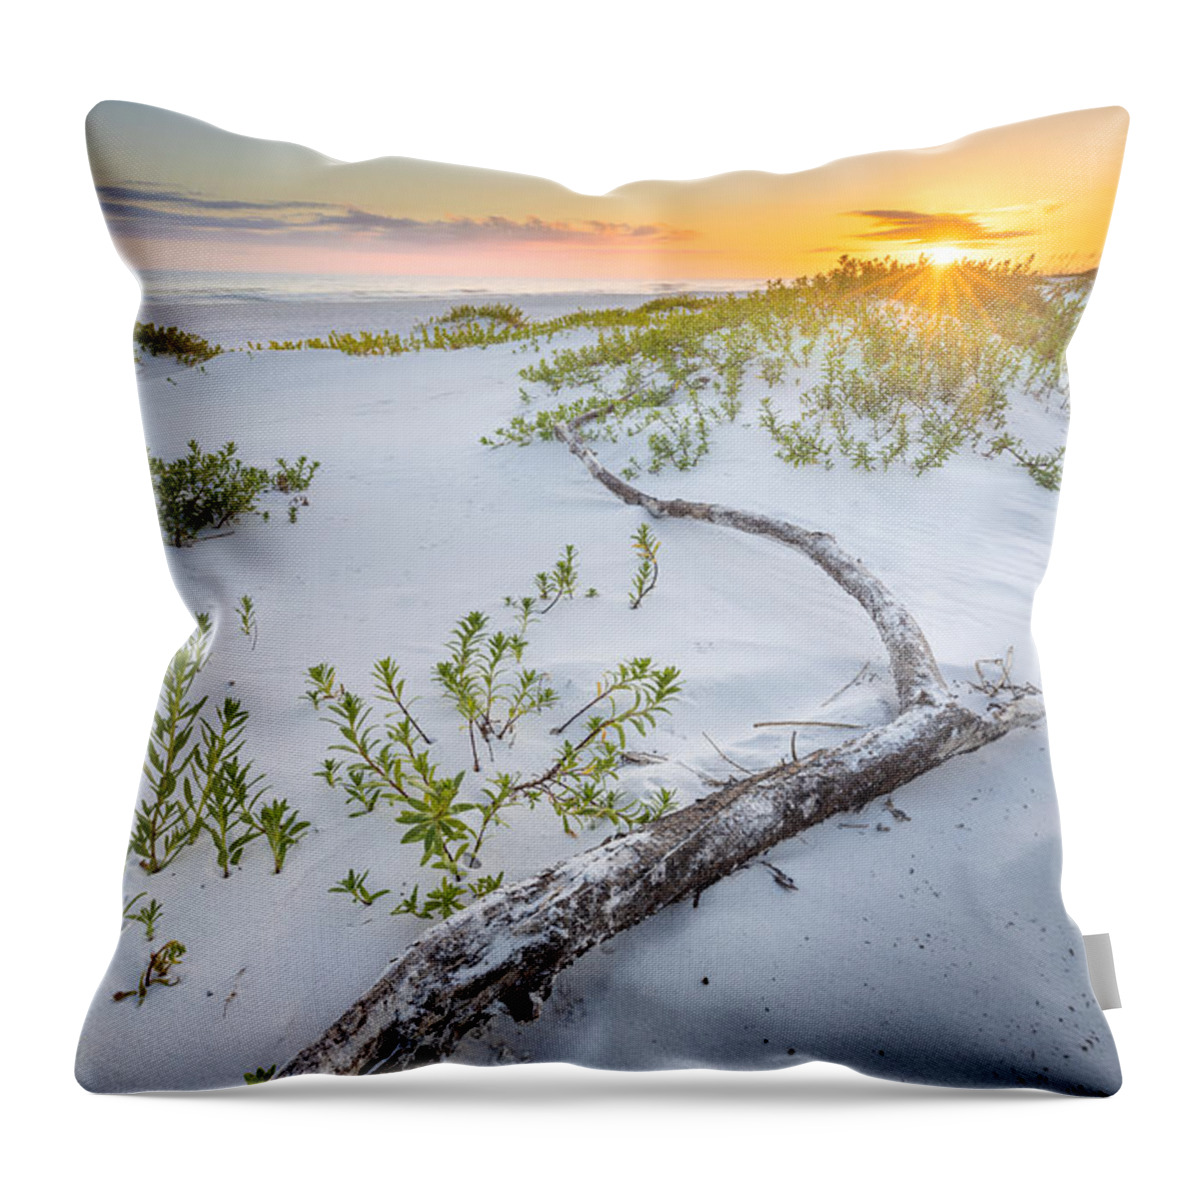 Beach Throw Pillow featuring the photograph Driftwood At The Gulf Islands National Seashore Florida by Jordan Hill